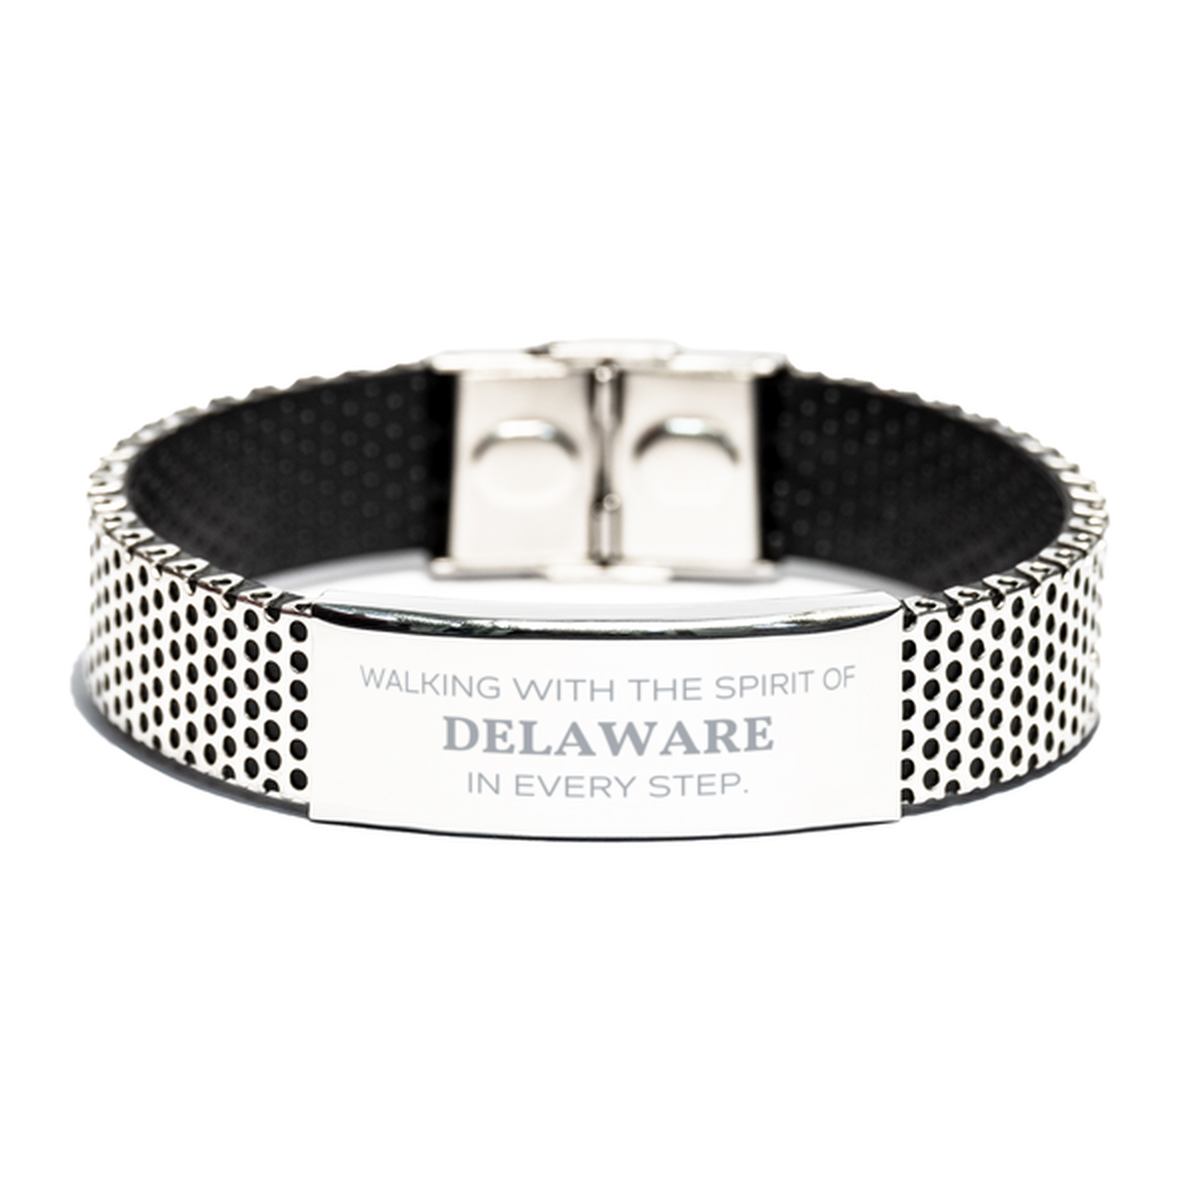 Delaware Gifts, Walking with the spirit, Love Delaware Birthday Christmas Stainless Steel Bracelet For Delaware People, Men, Women, Friends